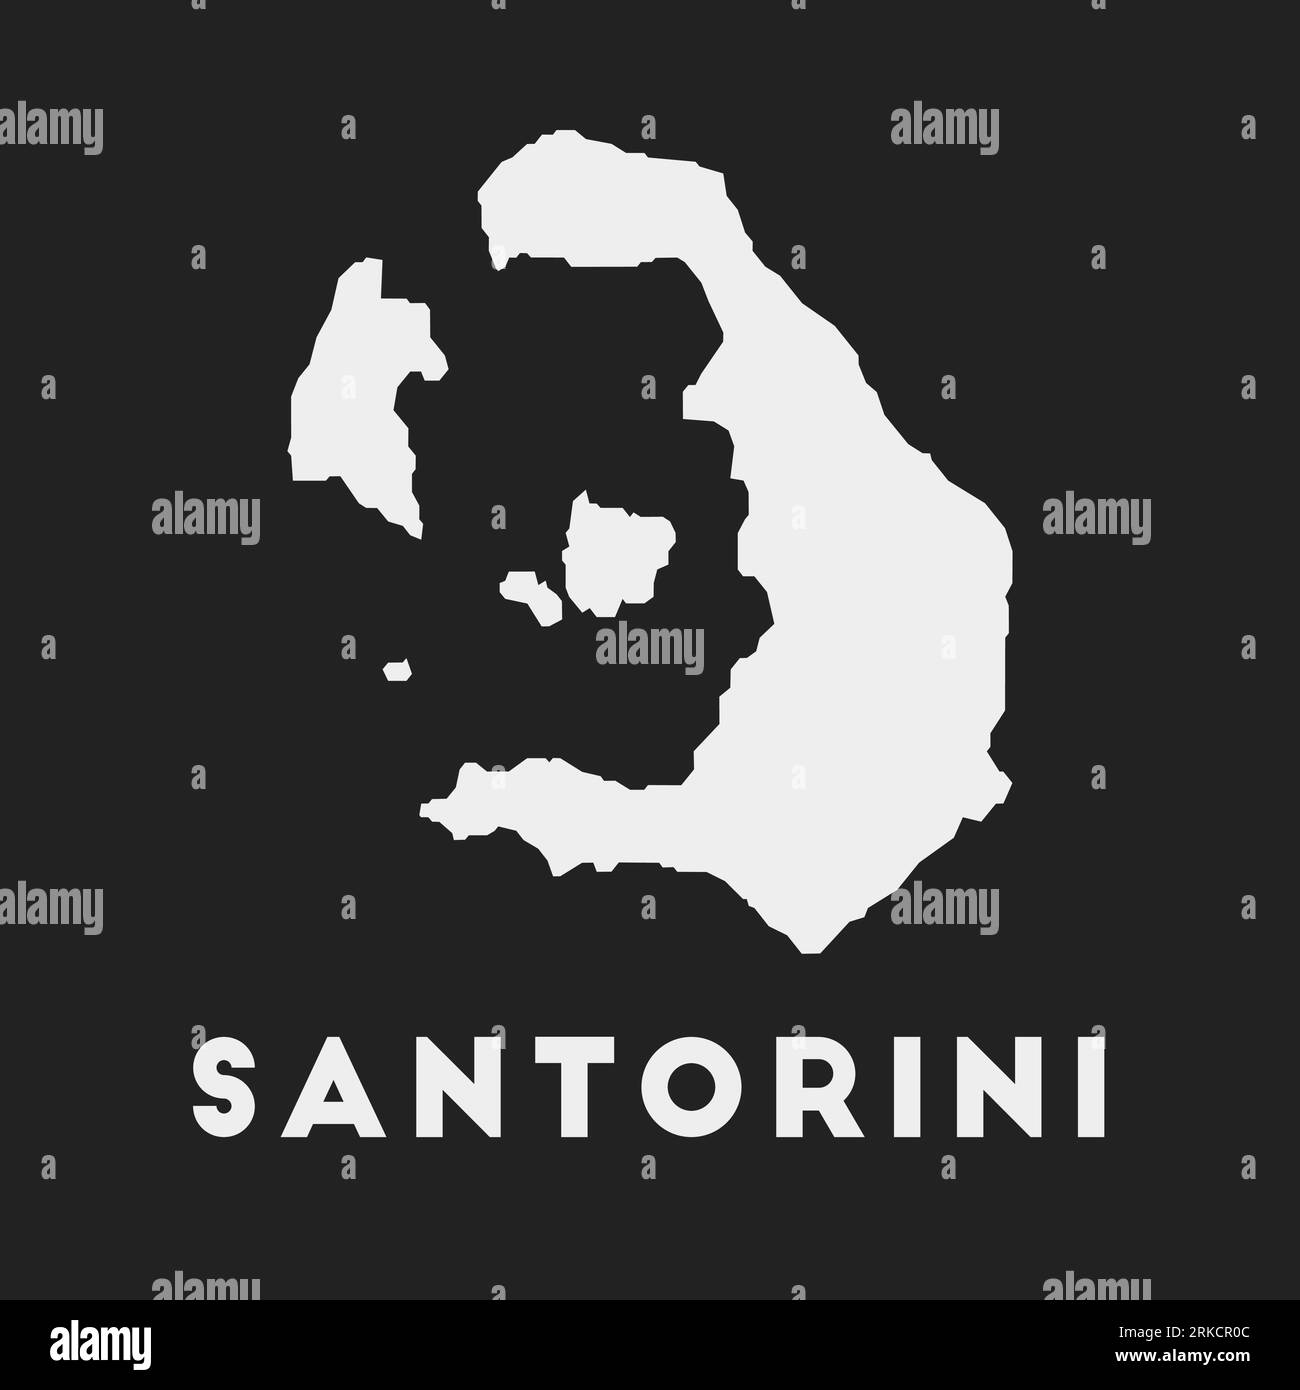 Santorini icon. Island map on dark background. Stylish Santorini map with island name. Vector illustration. Stock Vector